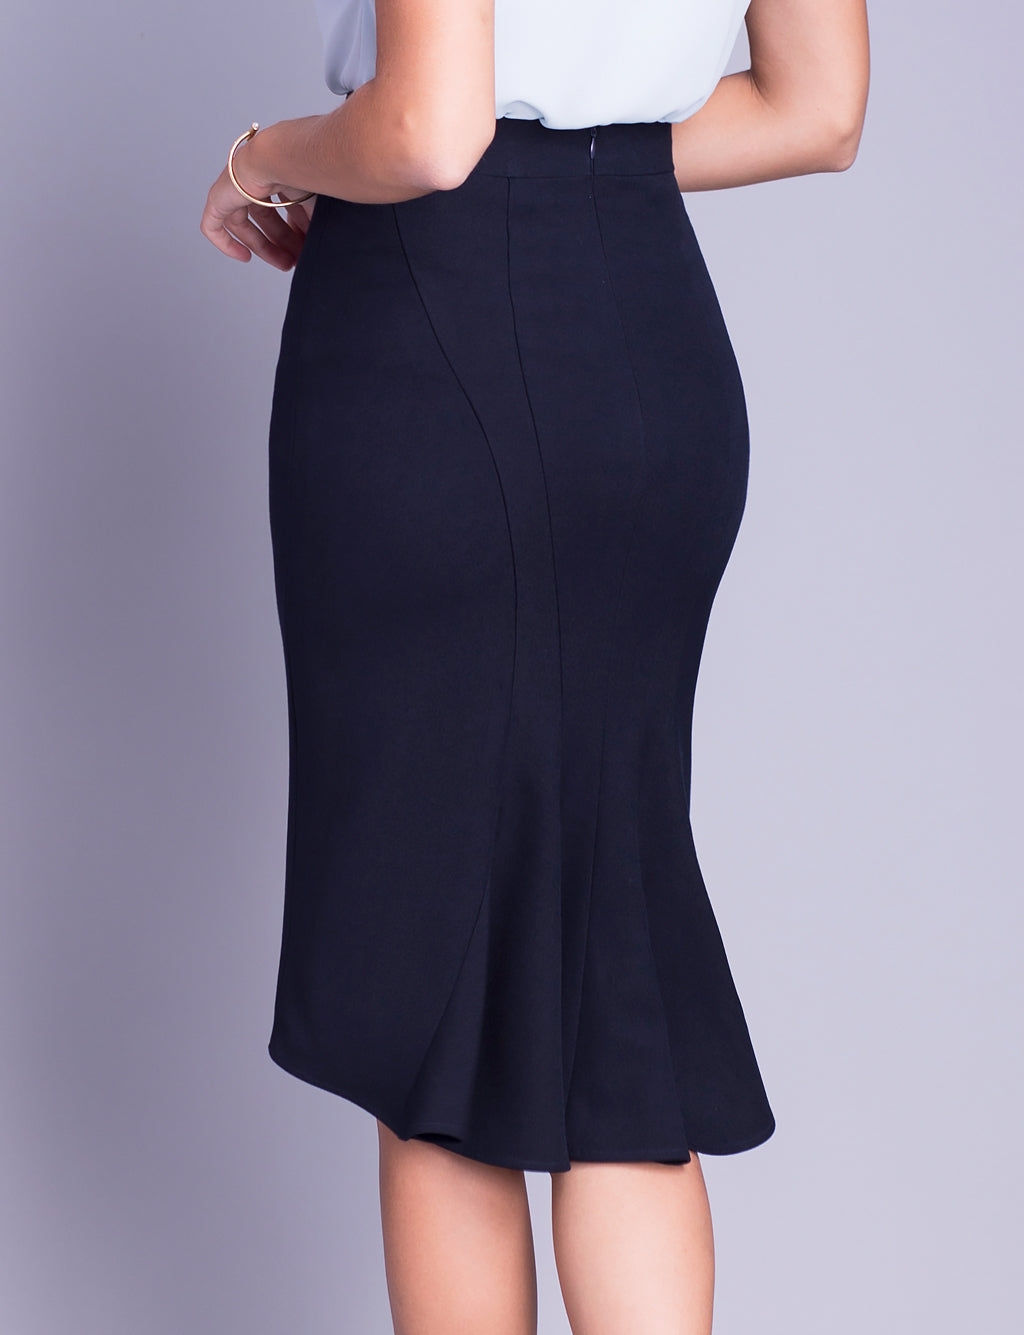 Jones New York Women's Washable Suiting Pencil Skirt, Black, 2 at Amazon  Women's Clothing store